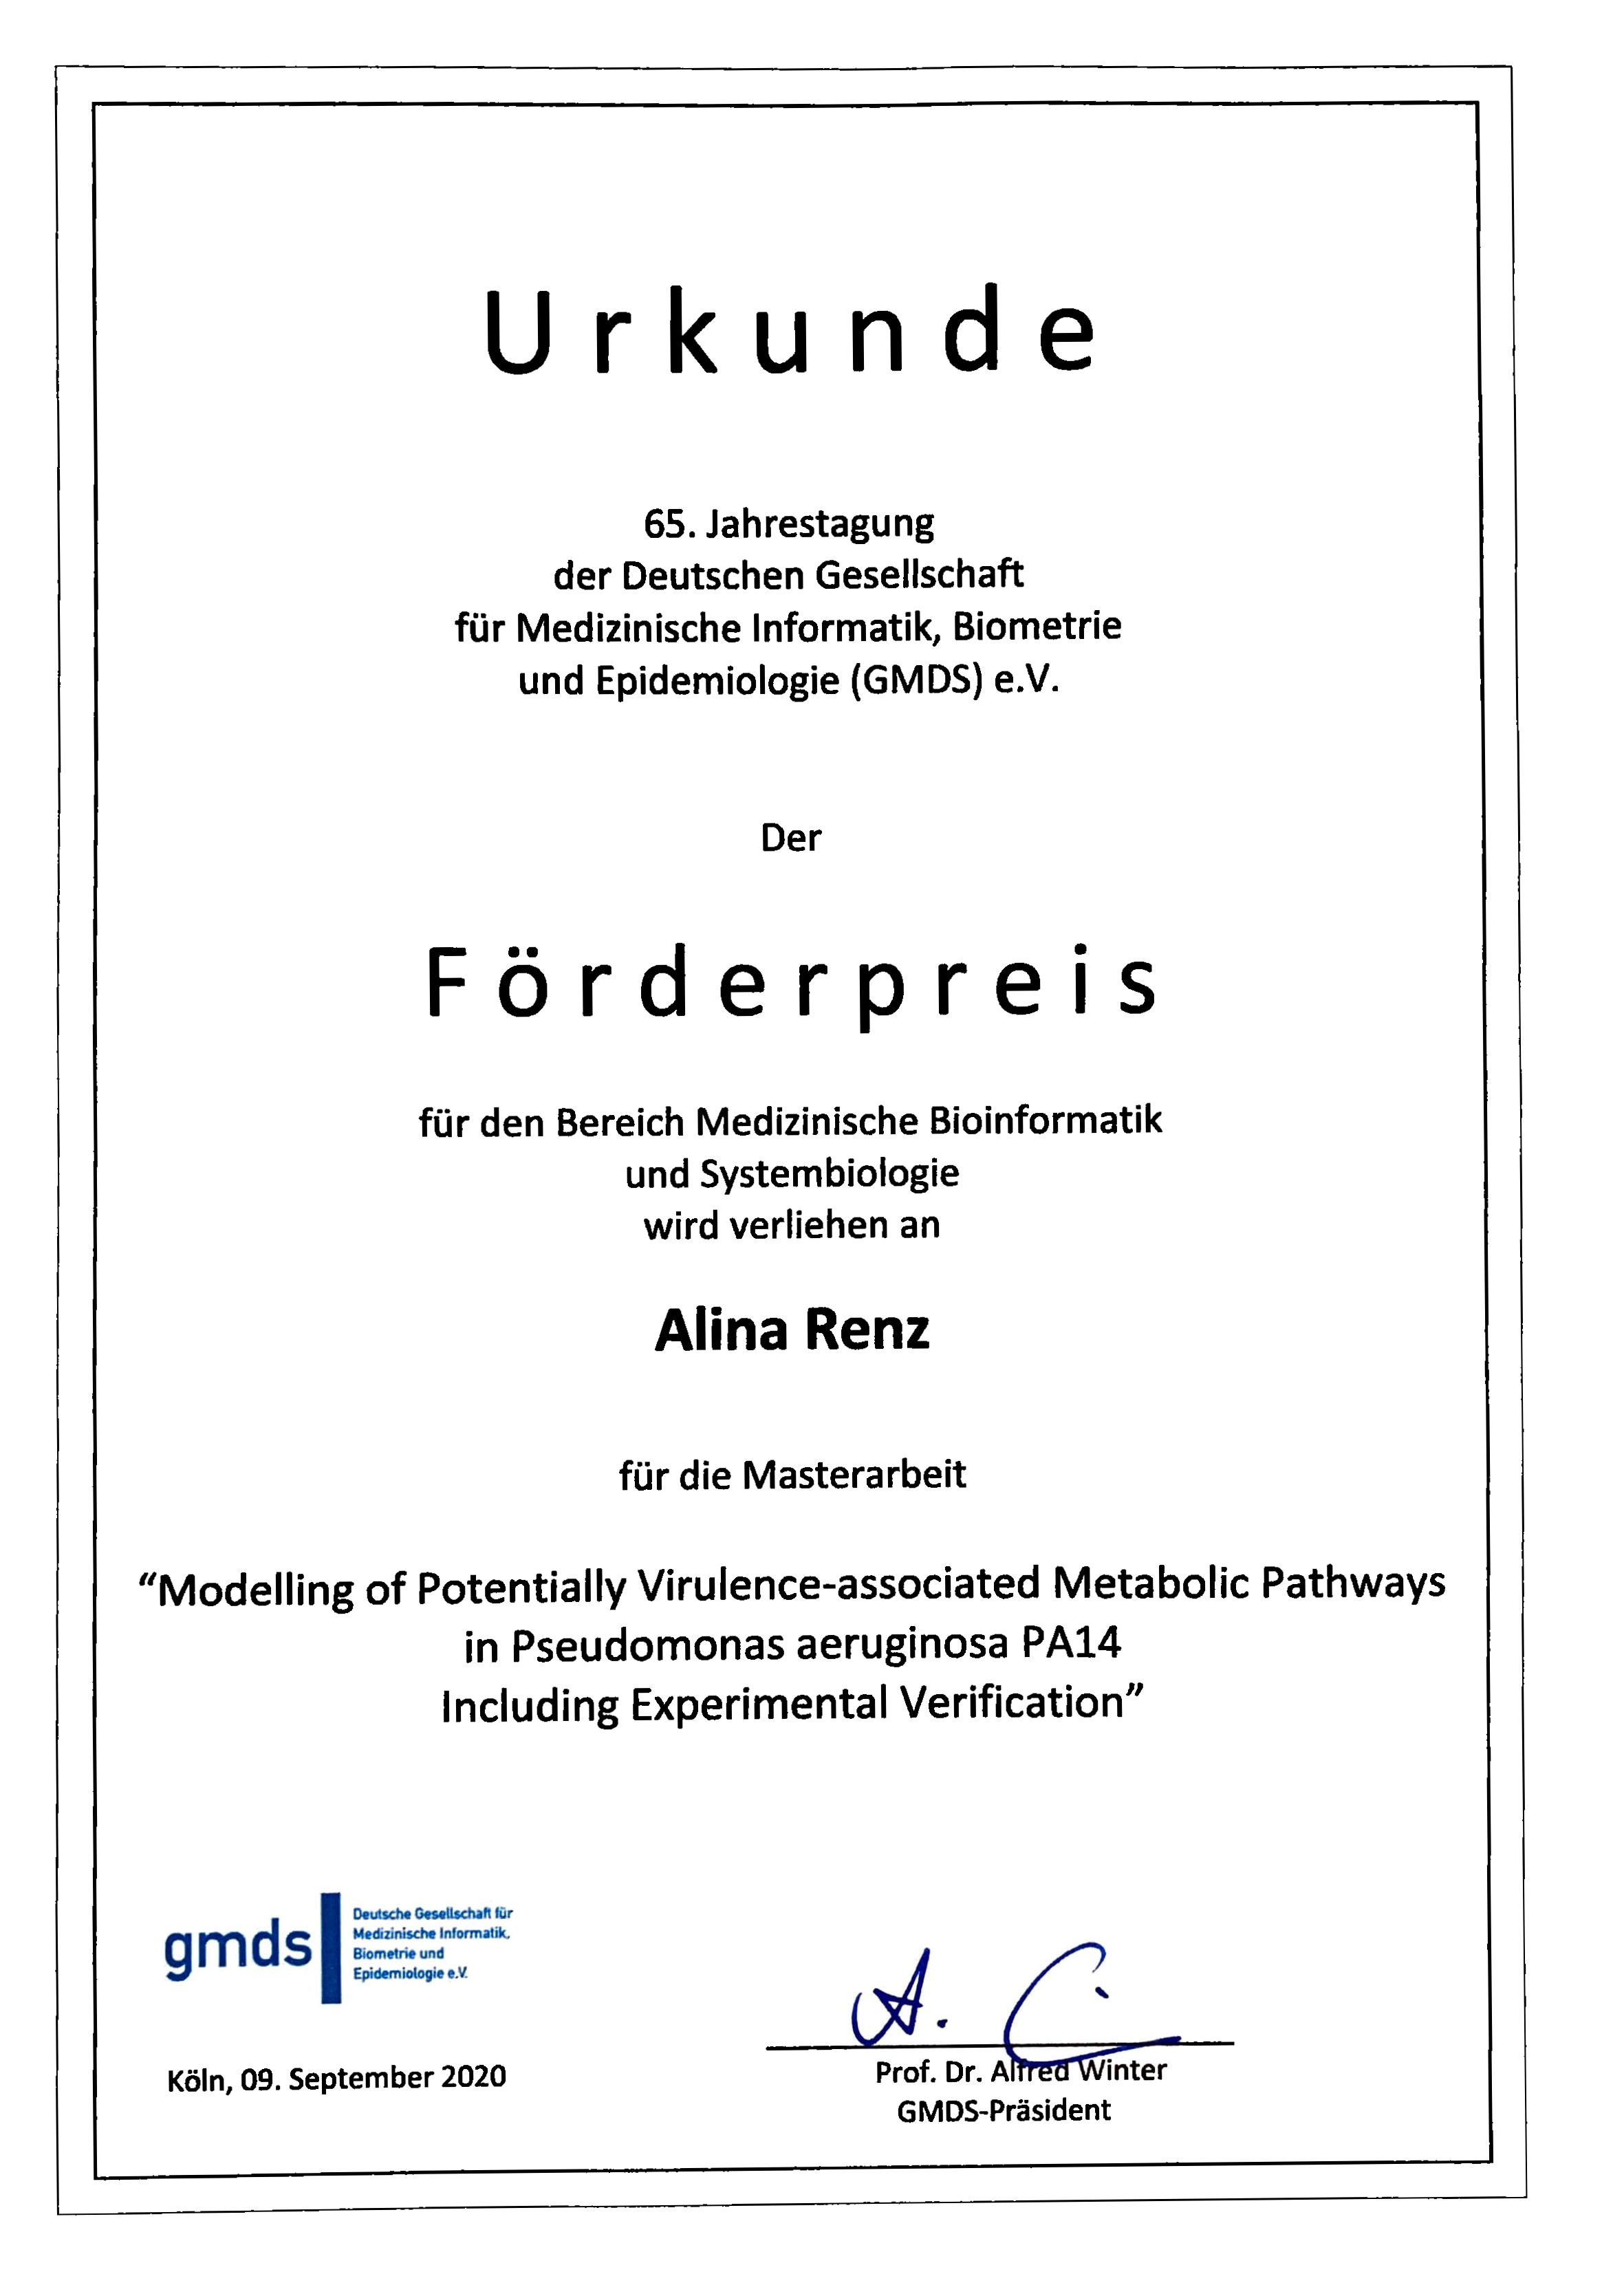 Master thesis award to Alina Renz